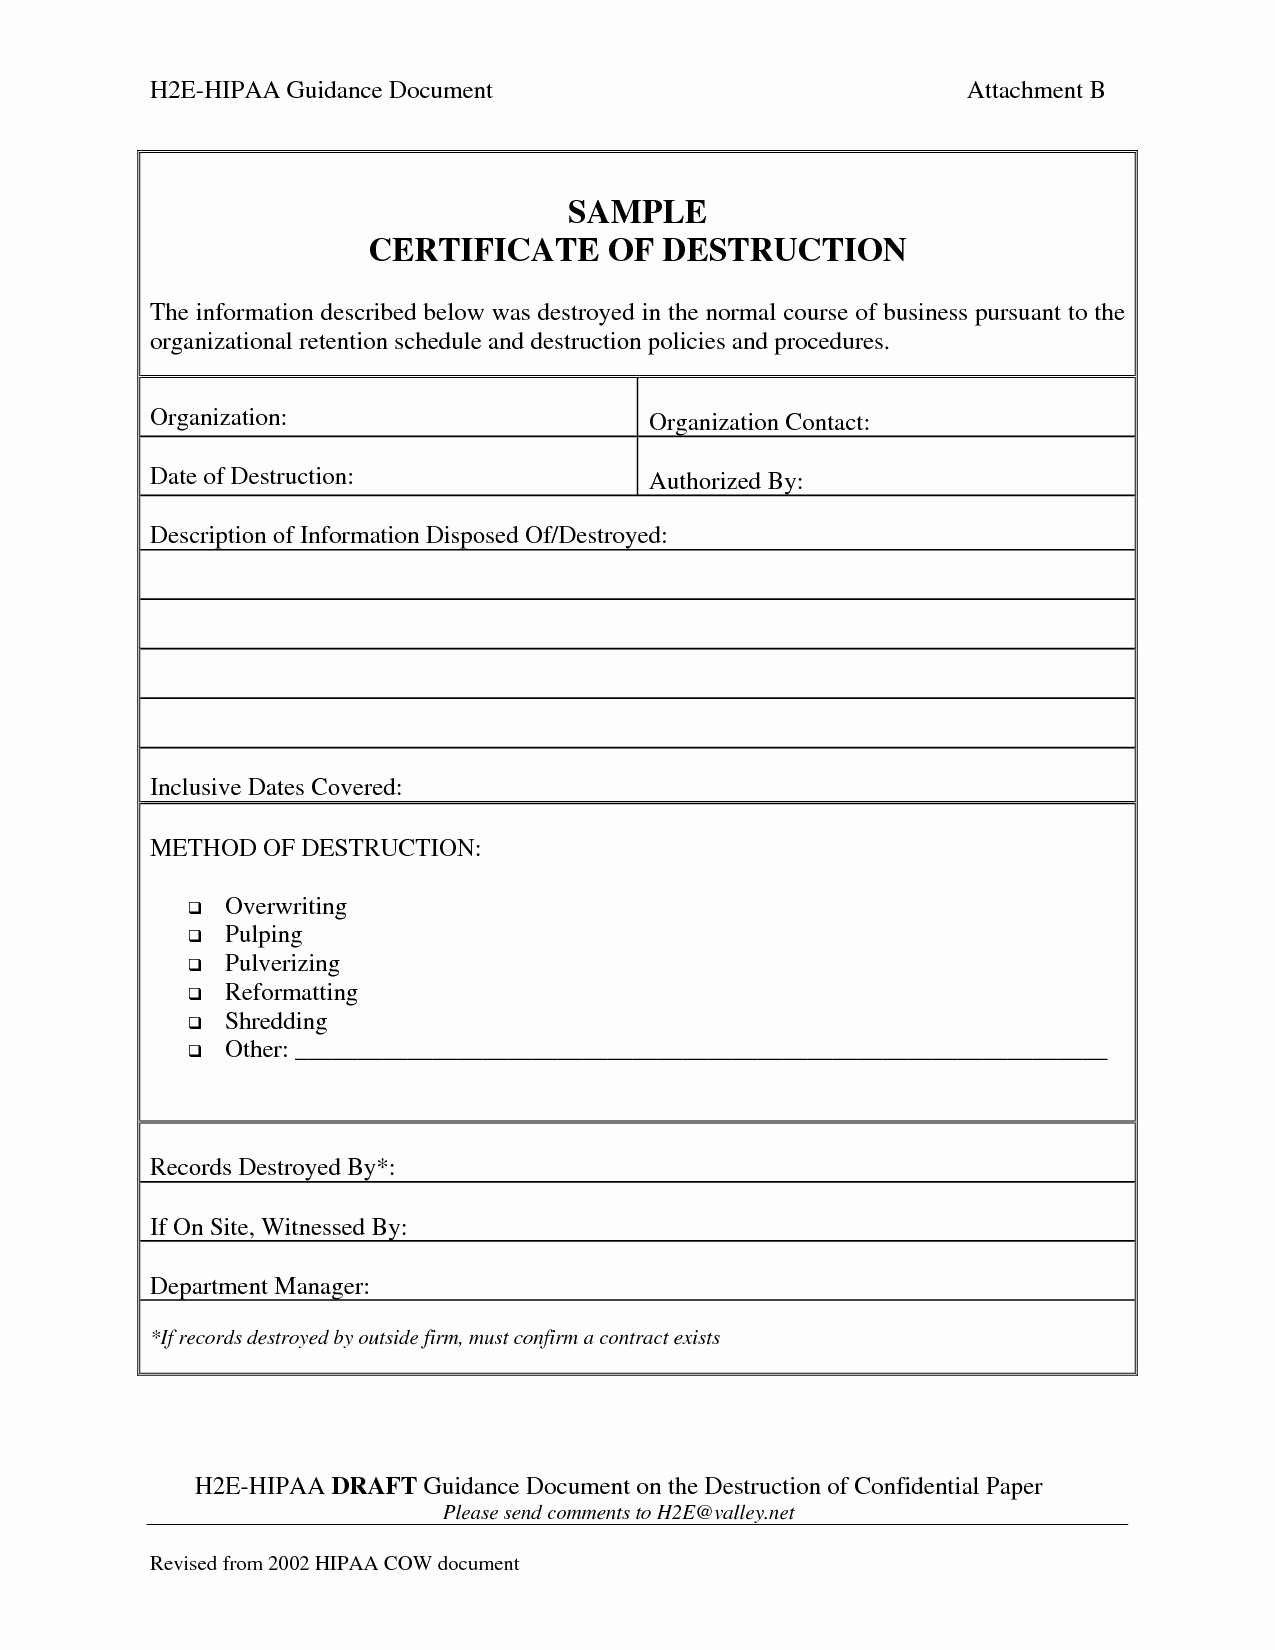 Certificate Of Destruction Template Inspirational Data Destruction Certificate Sample to Pin On